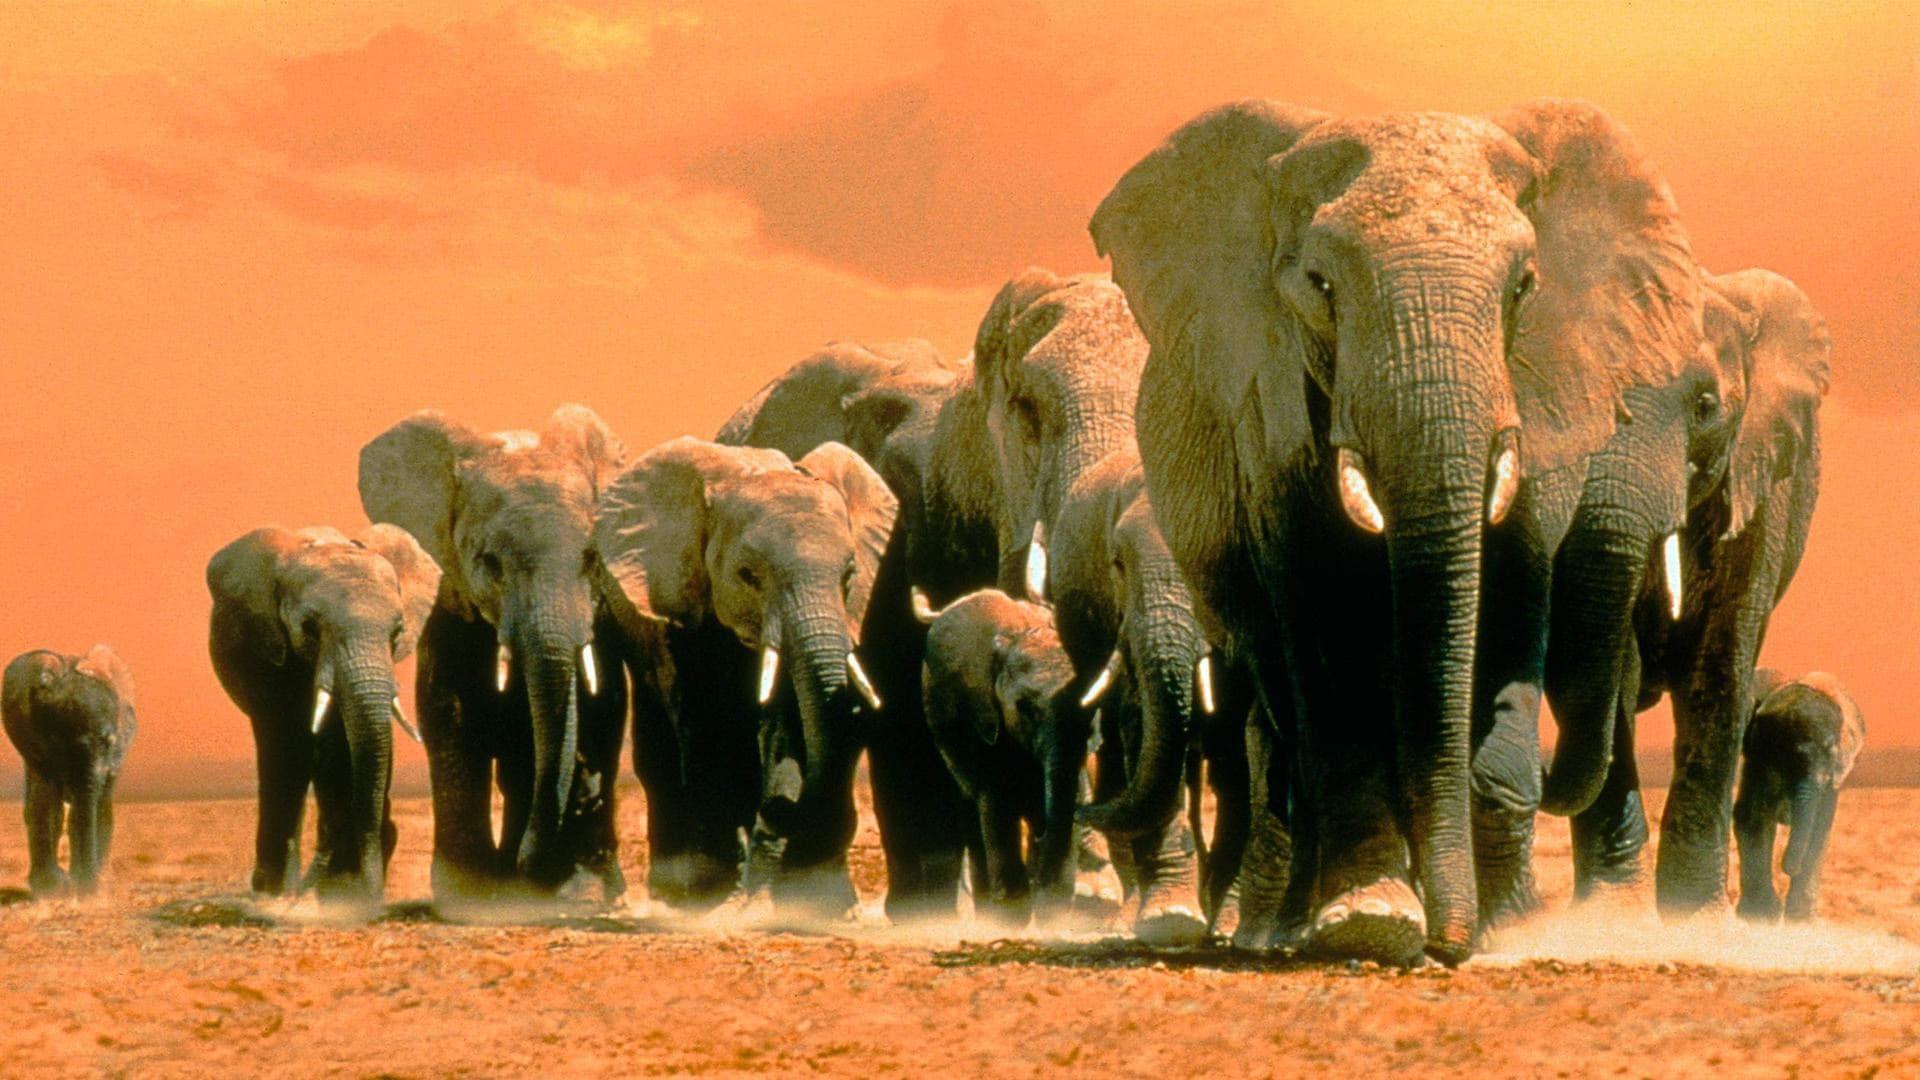 Africa's Elephant Kingdom backdrop